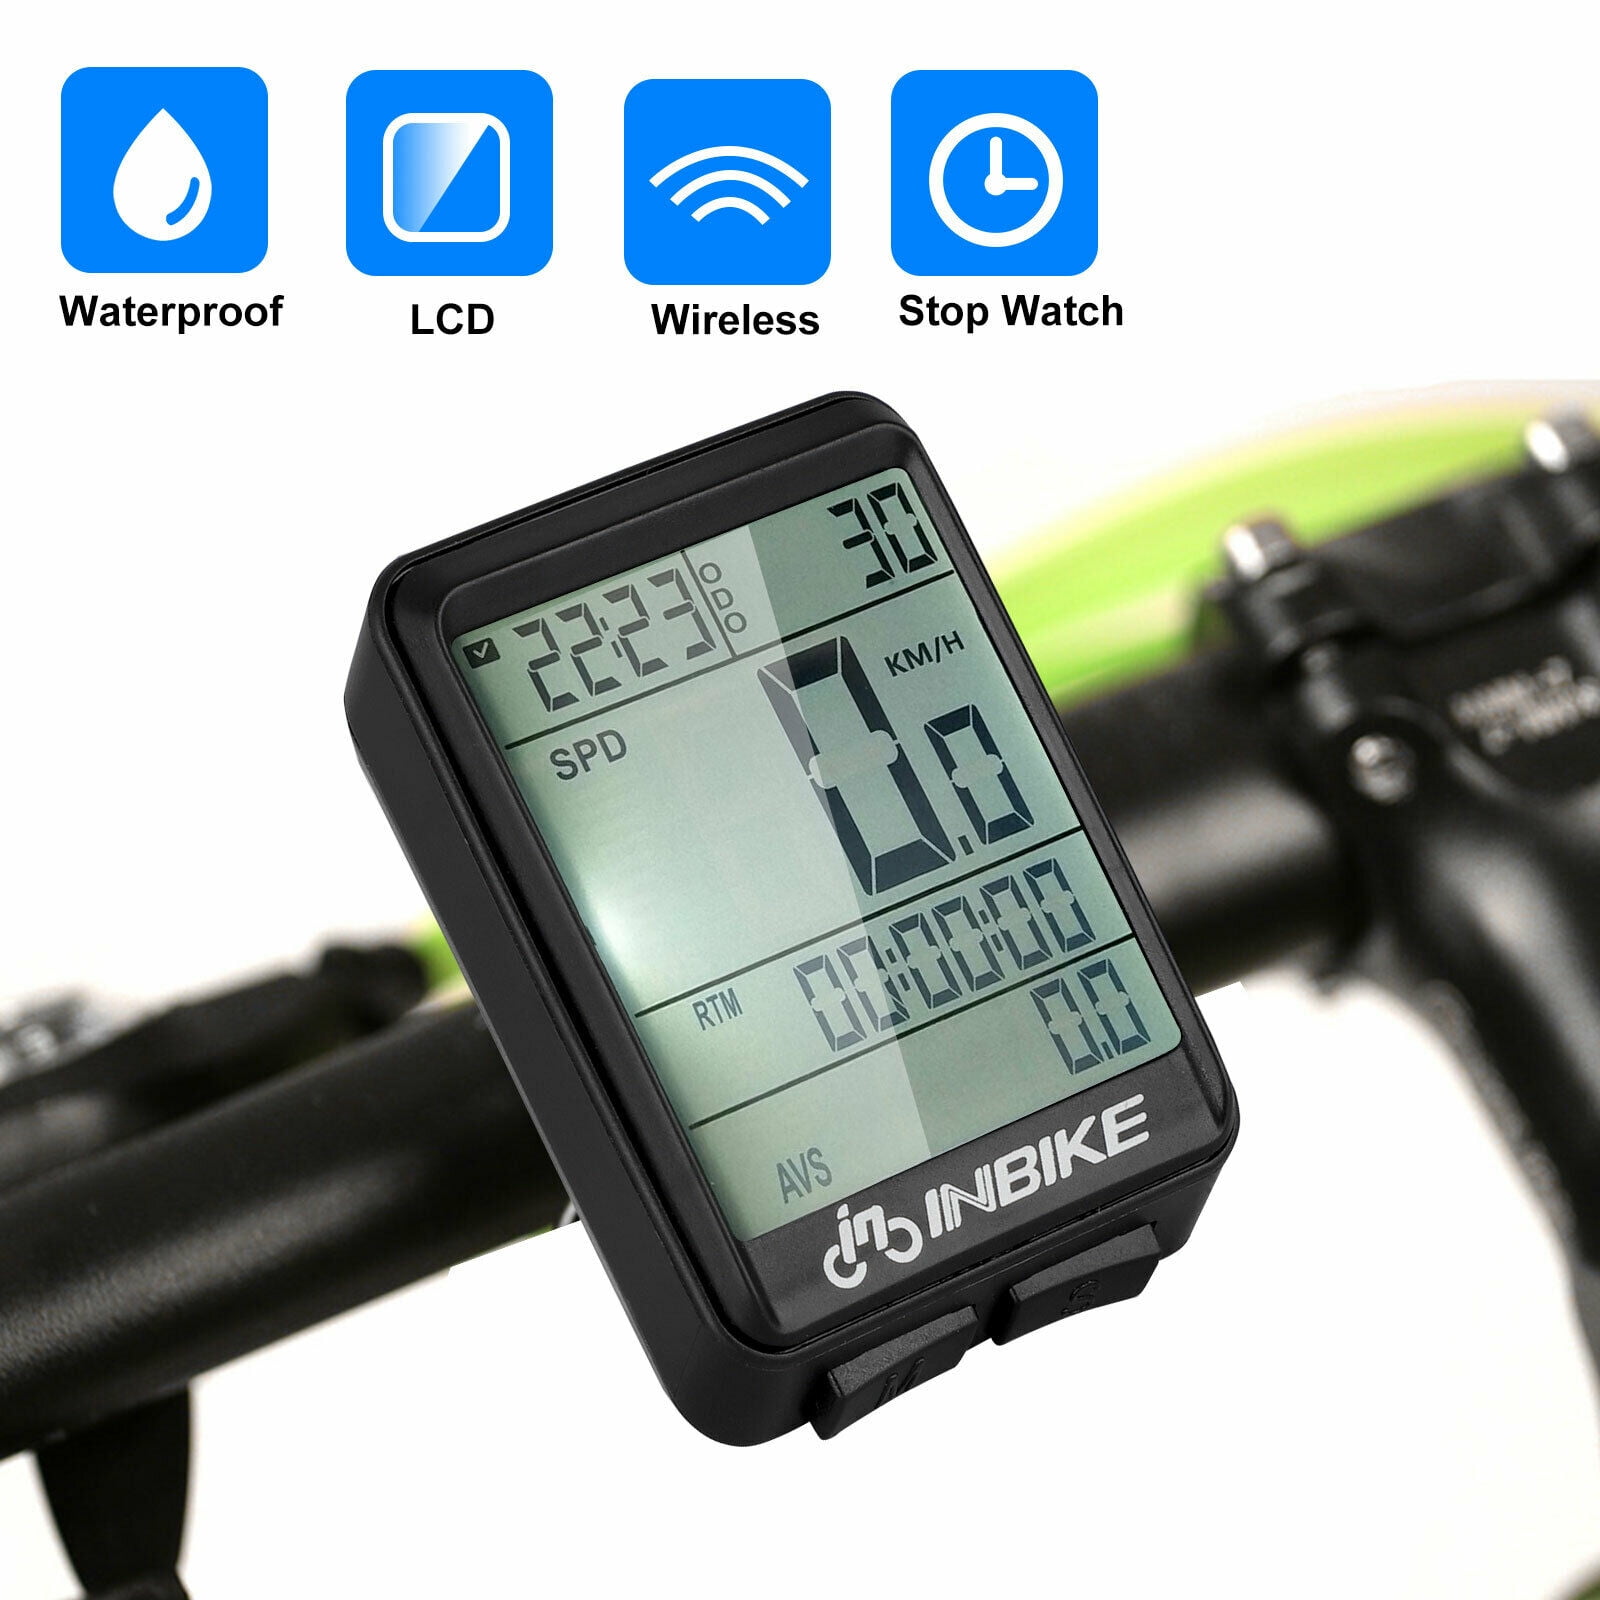 Wireless LCD Digital Cycle Computer Bicycle Bike Backlight Speedometer Odometer 